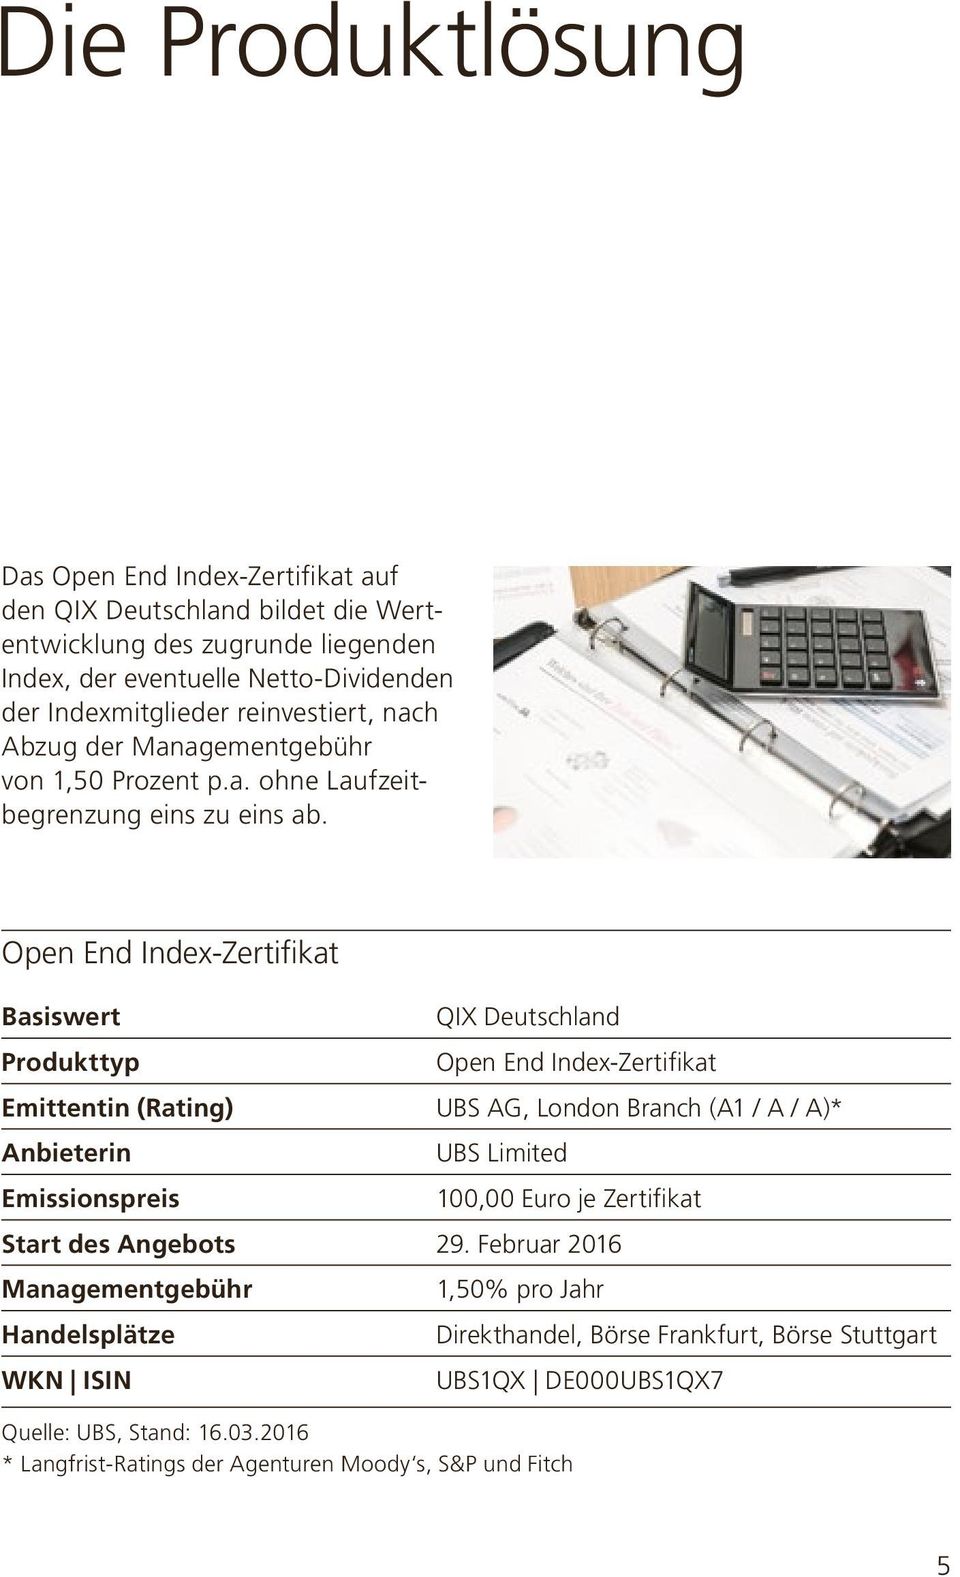 Open End Index-Zertifikat Basiswert Produkttyp Emittentin (Rating) Anbieterin Emissionspreis QIX Deutschland Open End Index-Zertifikat UBS AG, London Branch (A1 / A / A)* UBS Limited